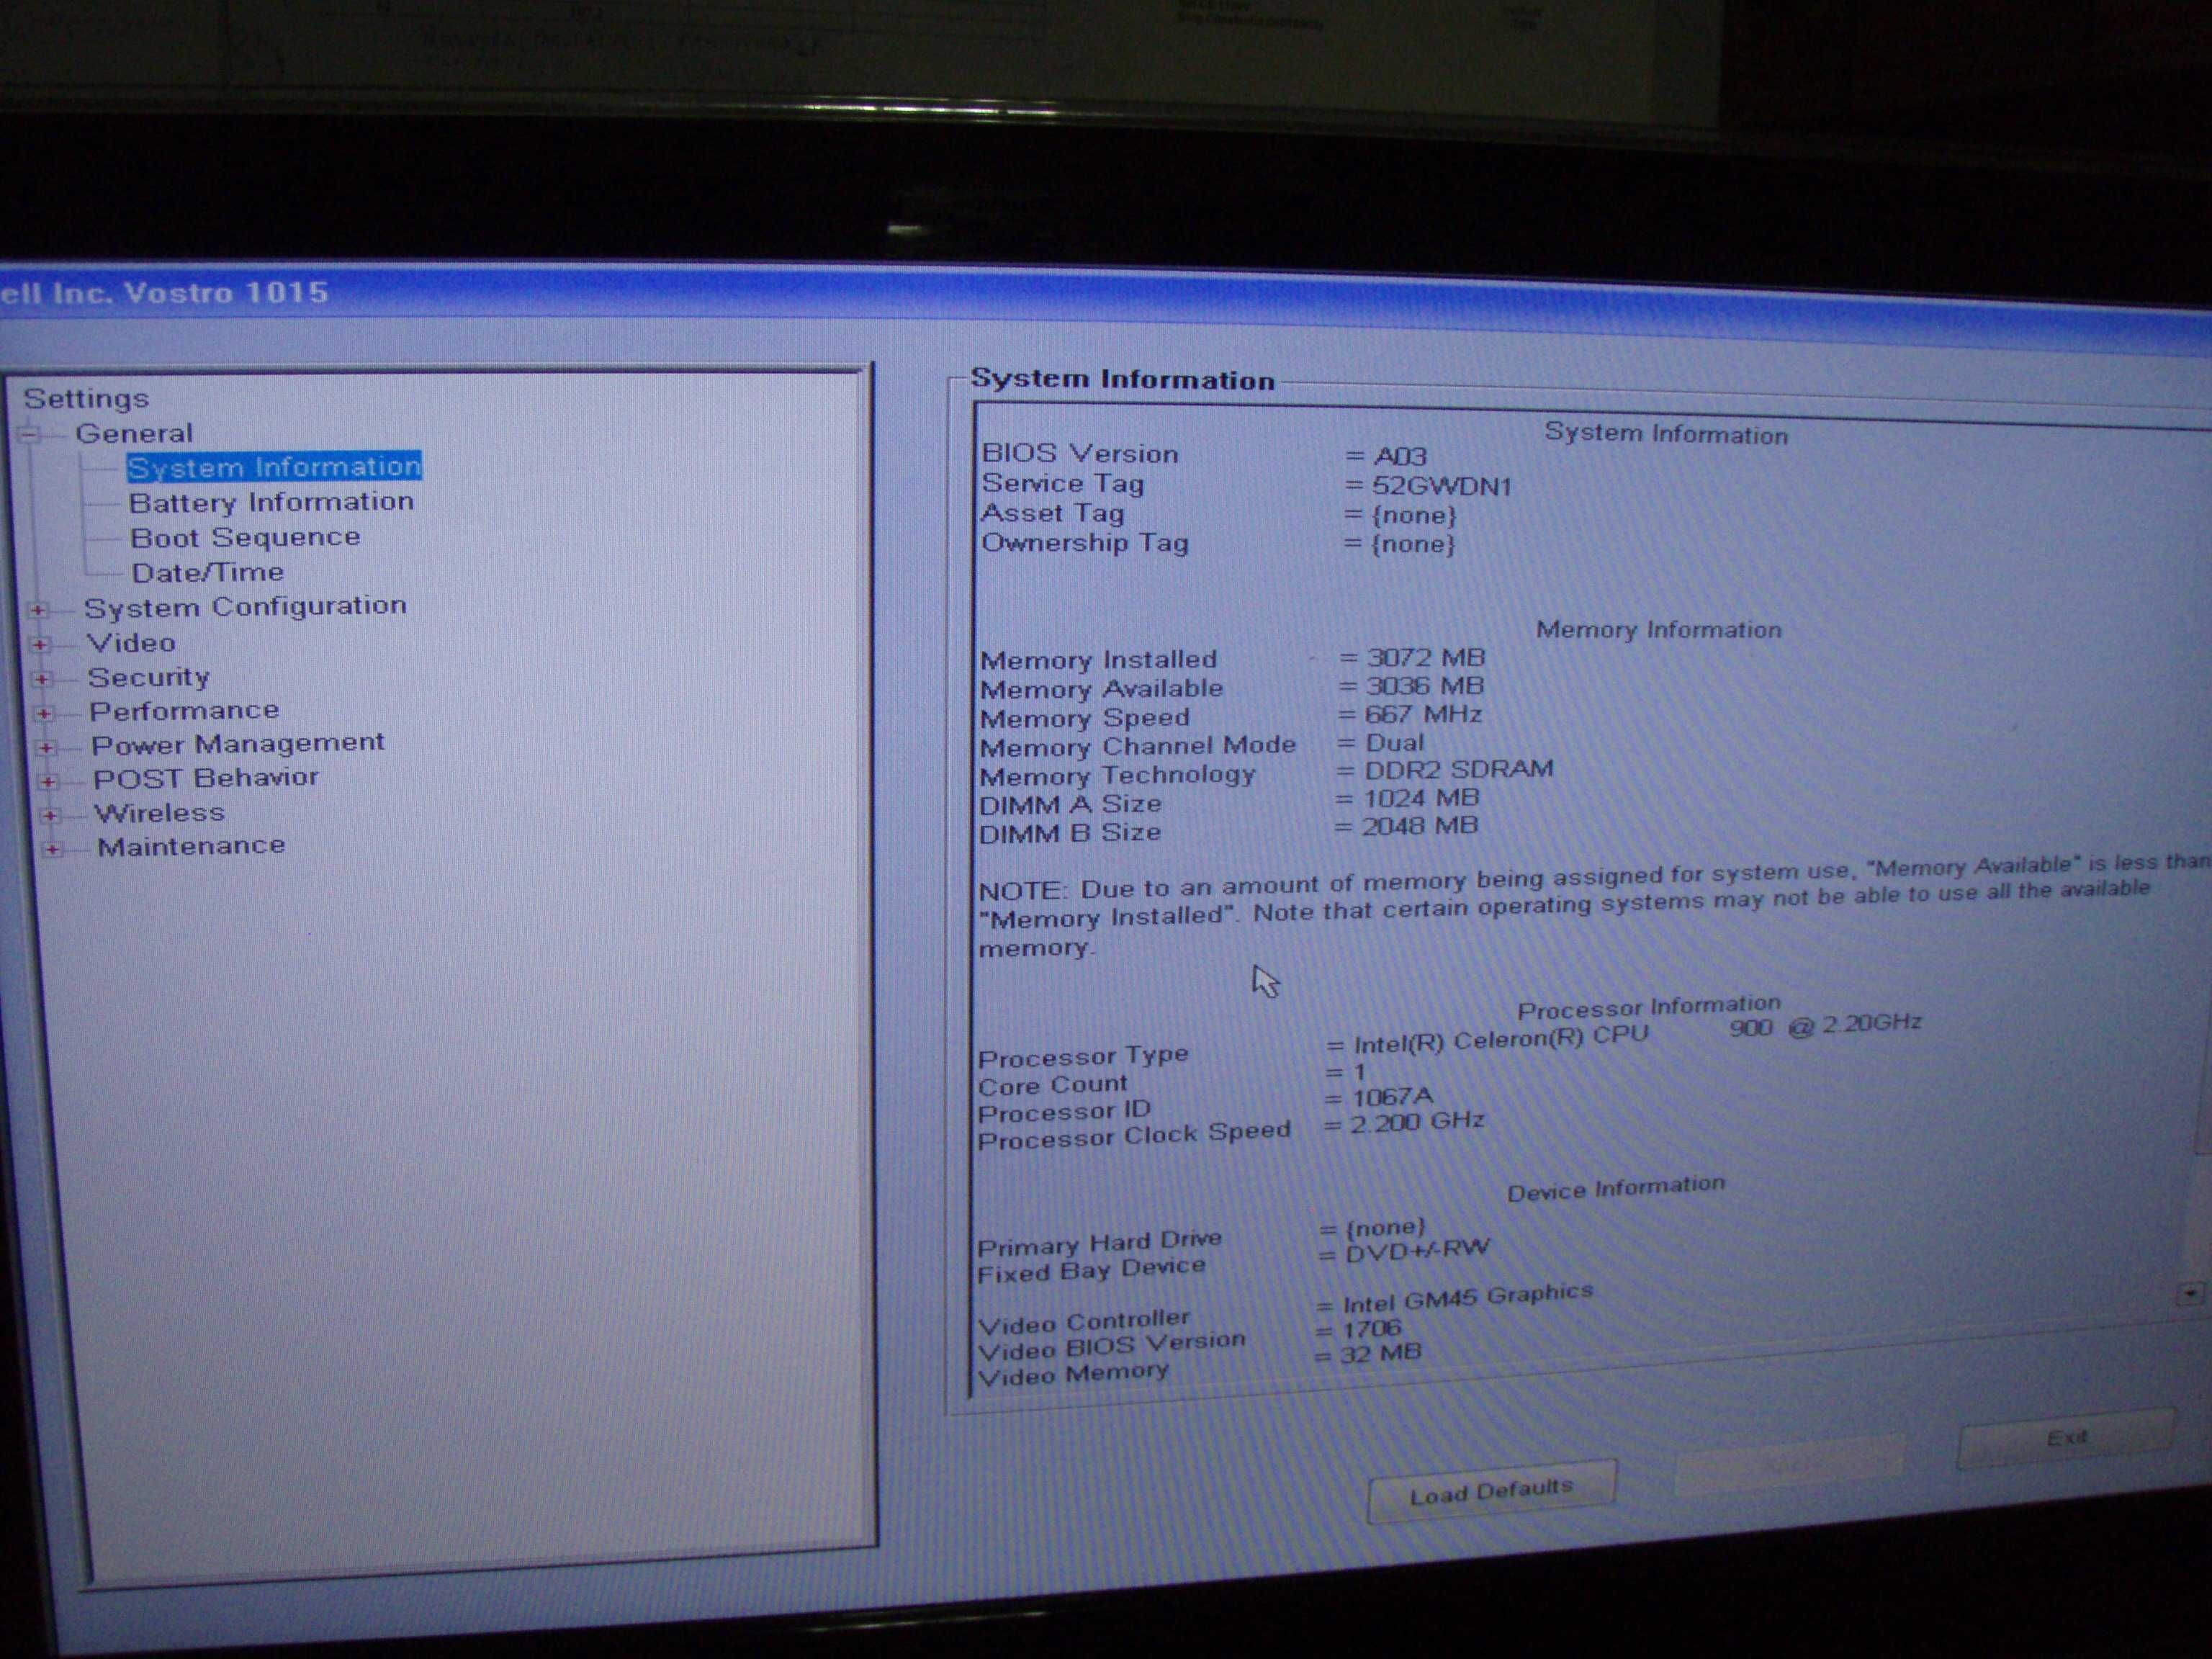 Dell Vostro 1015 Intel Celeron 900 2.2 Ghz, functional display spart